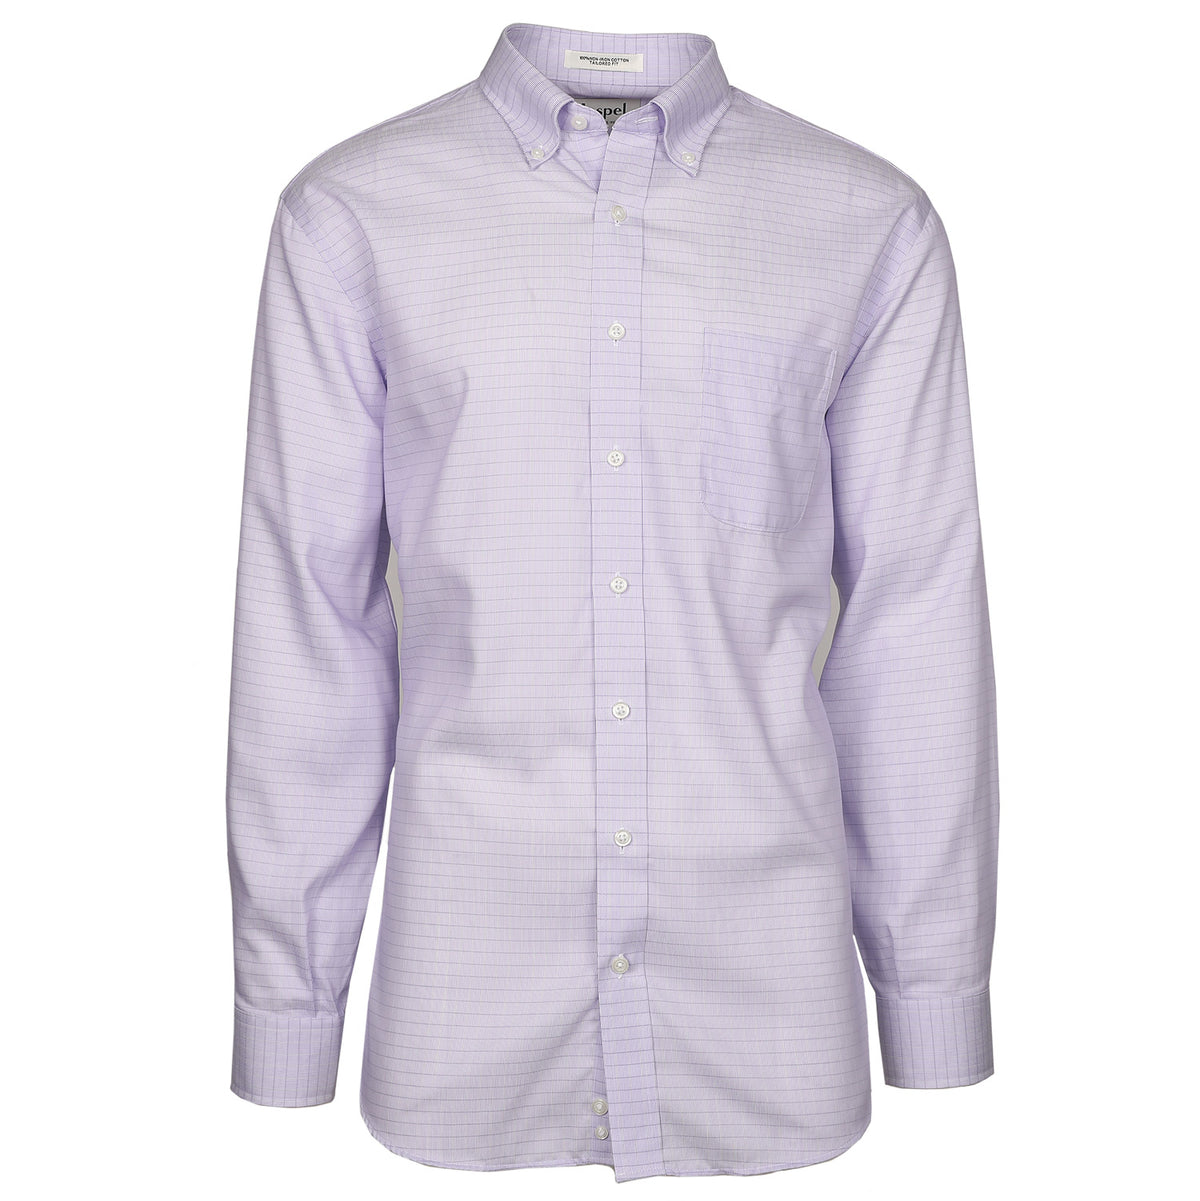 Howard Lavender Grid Sport Shirt